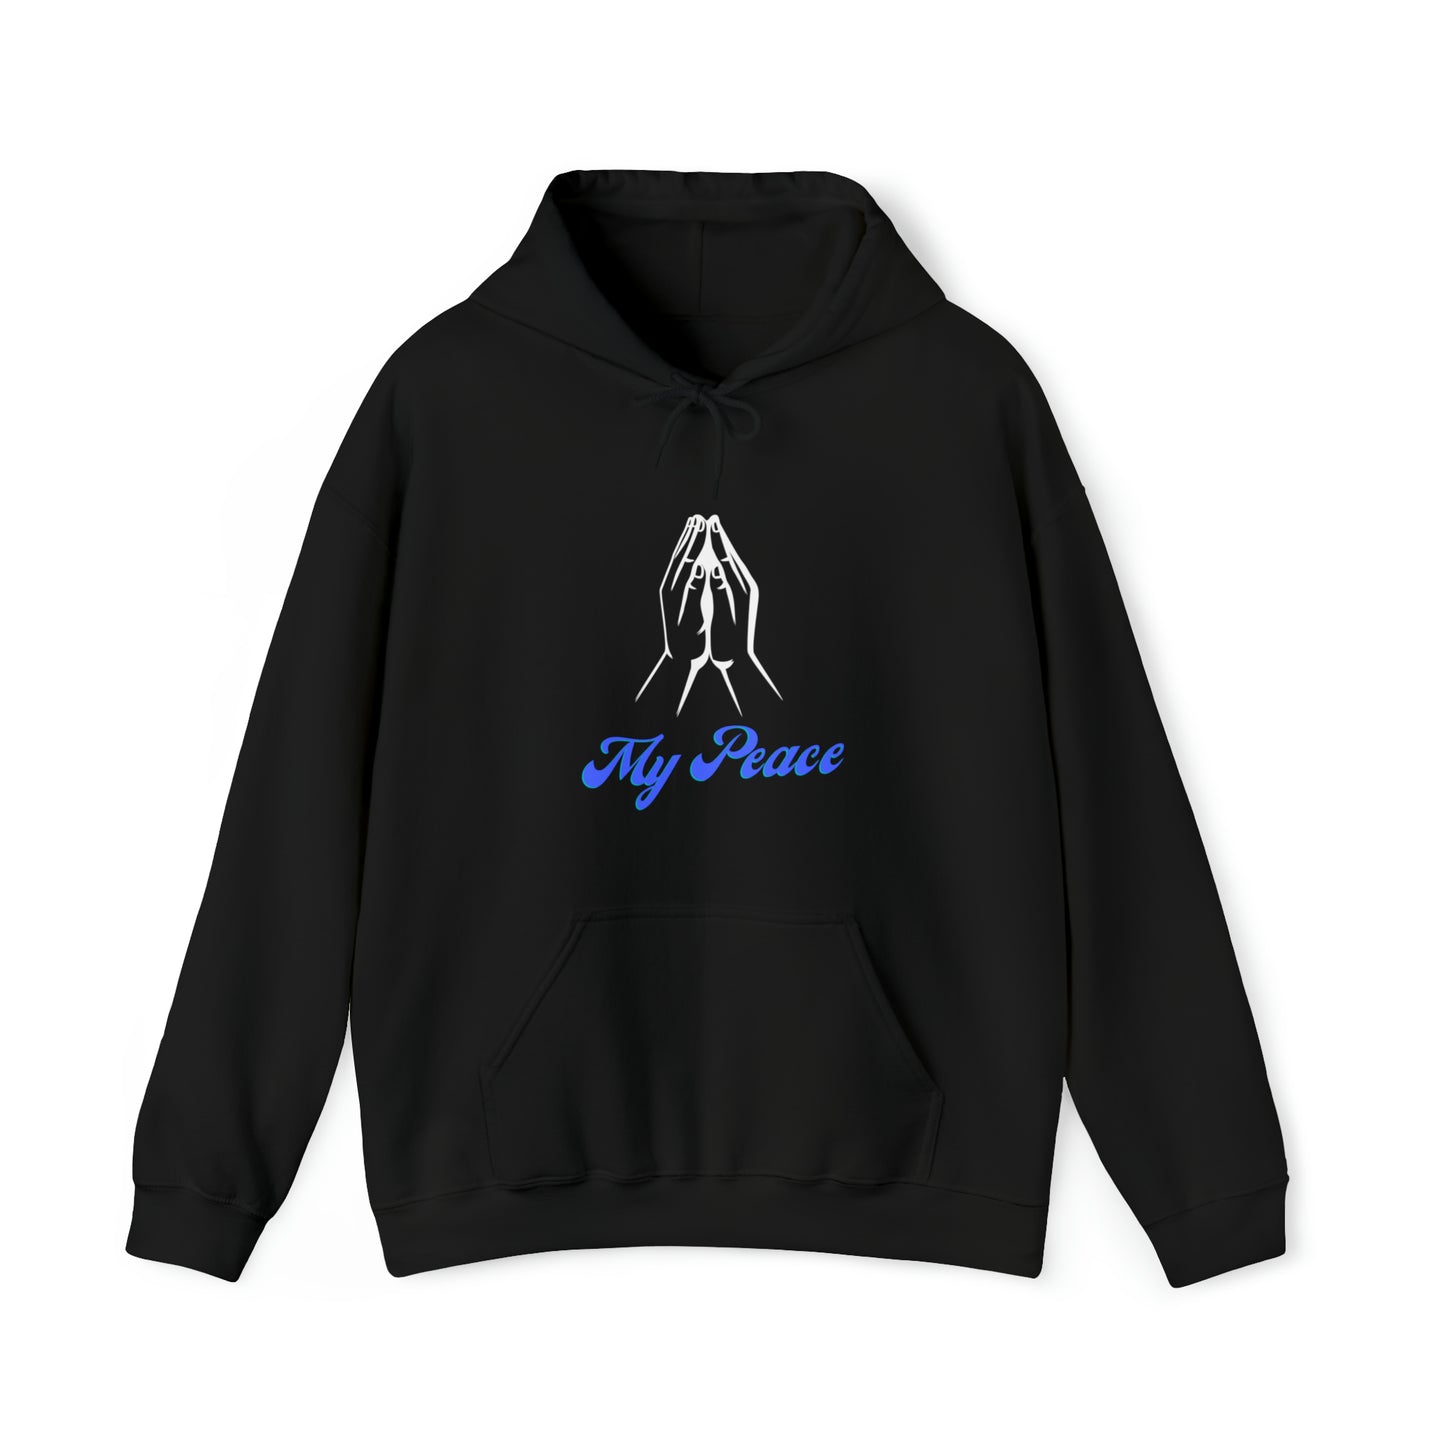 Praying Hands design hooded sweatshirt gift